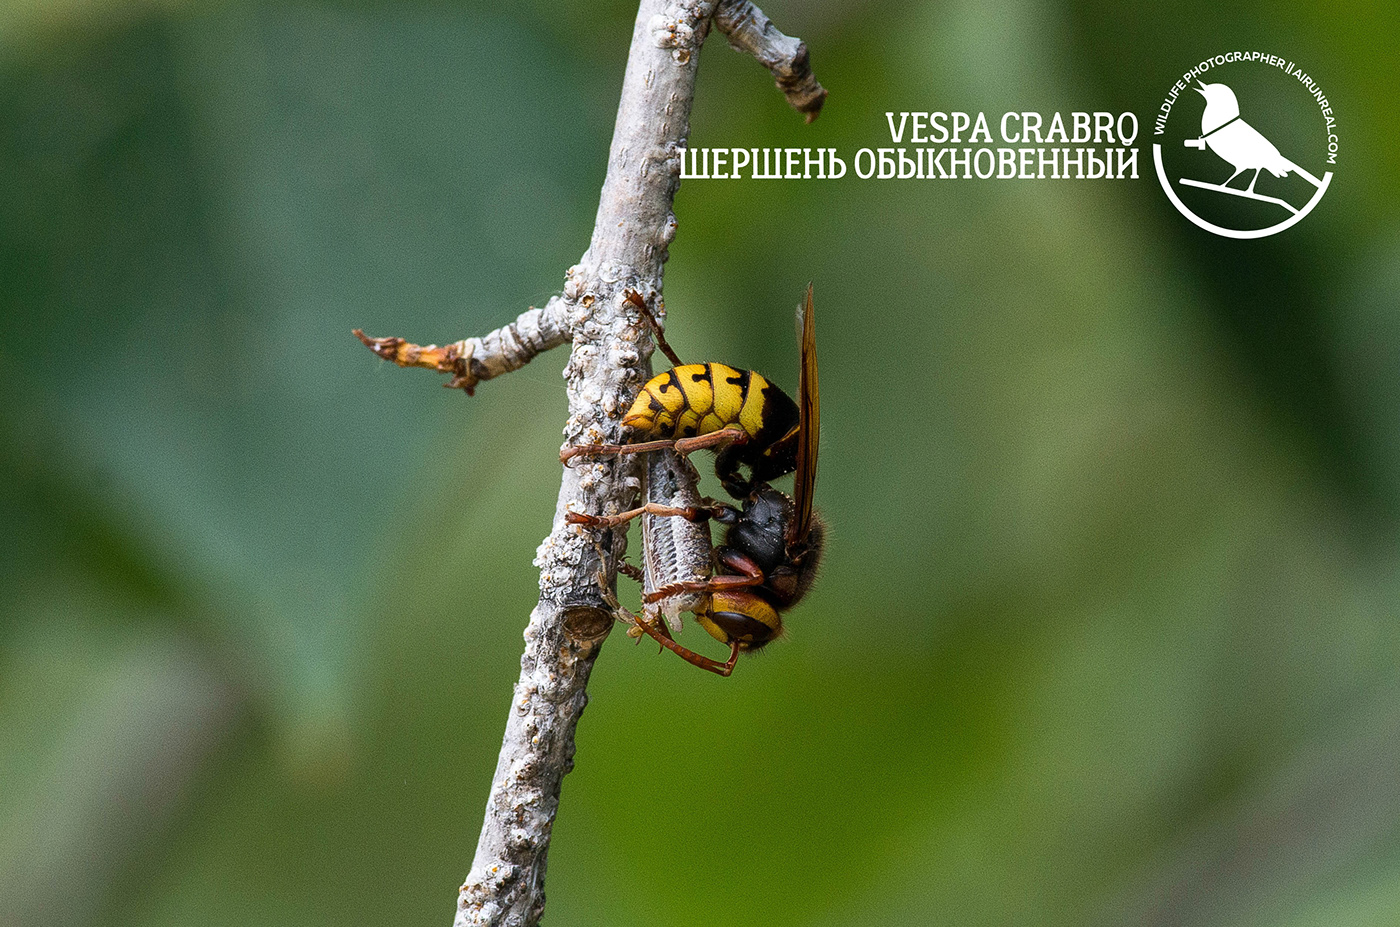 Vespa crabro insect Insects volgograd Russia wildlife macro macrp photo European hornet hornet